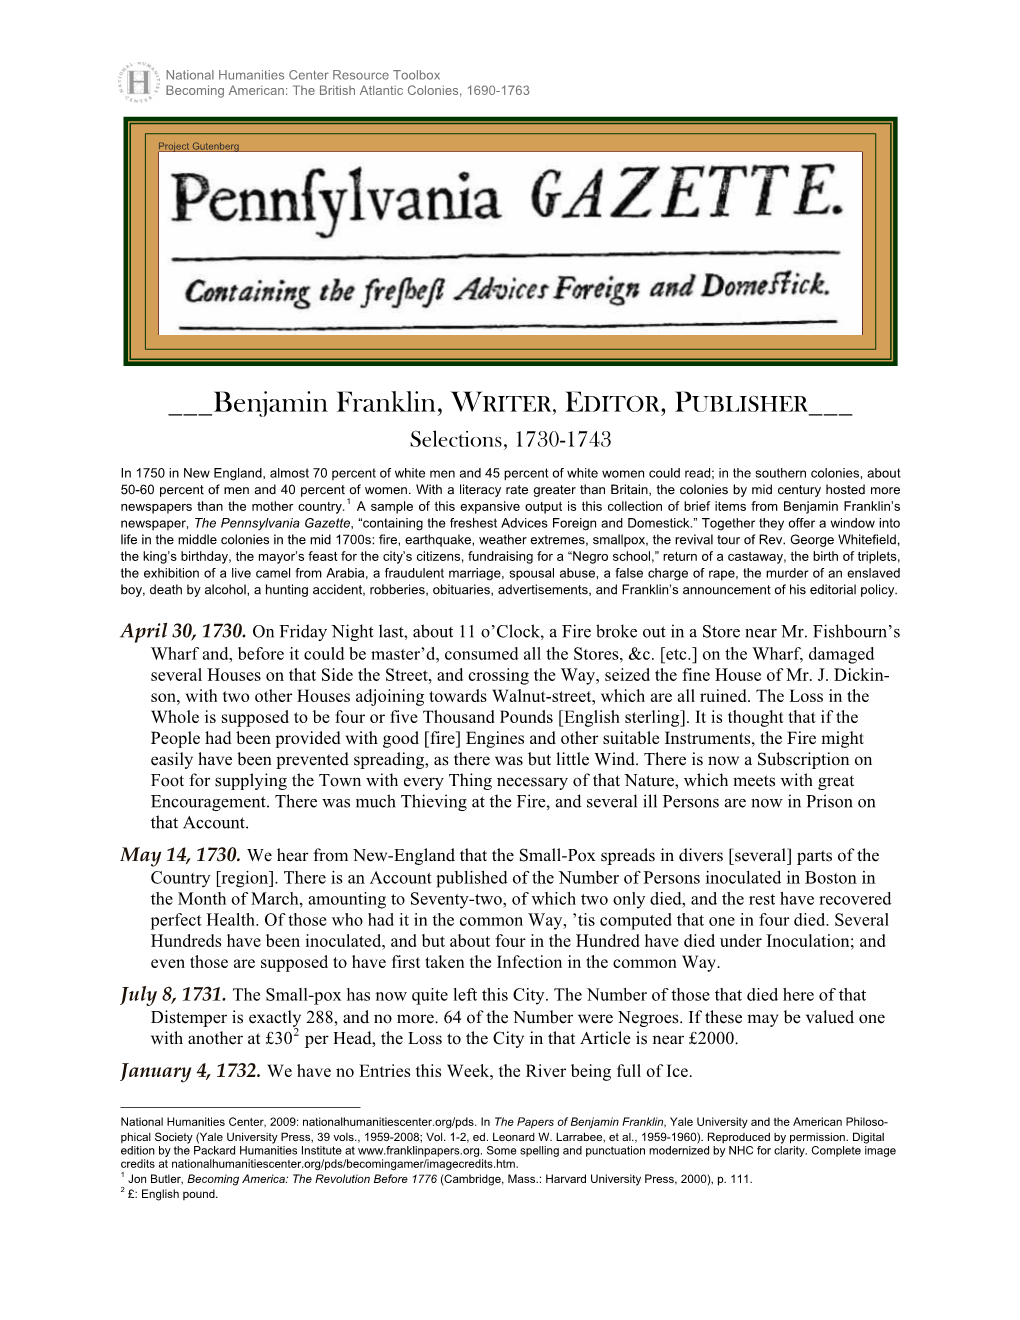 Pennsylvania Gazette, Benjamin Franklin, Writer, Editor, Publisher